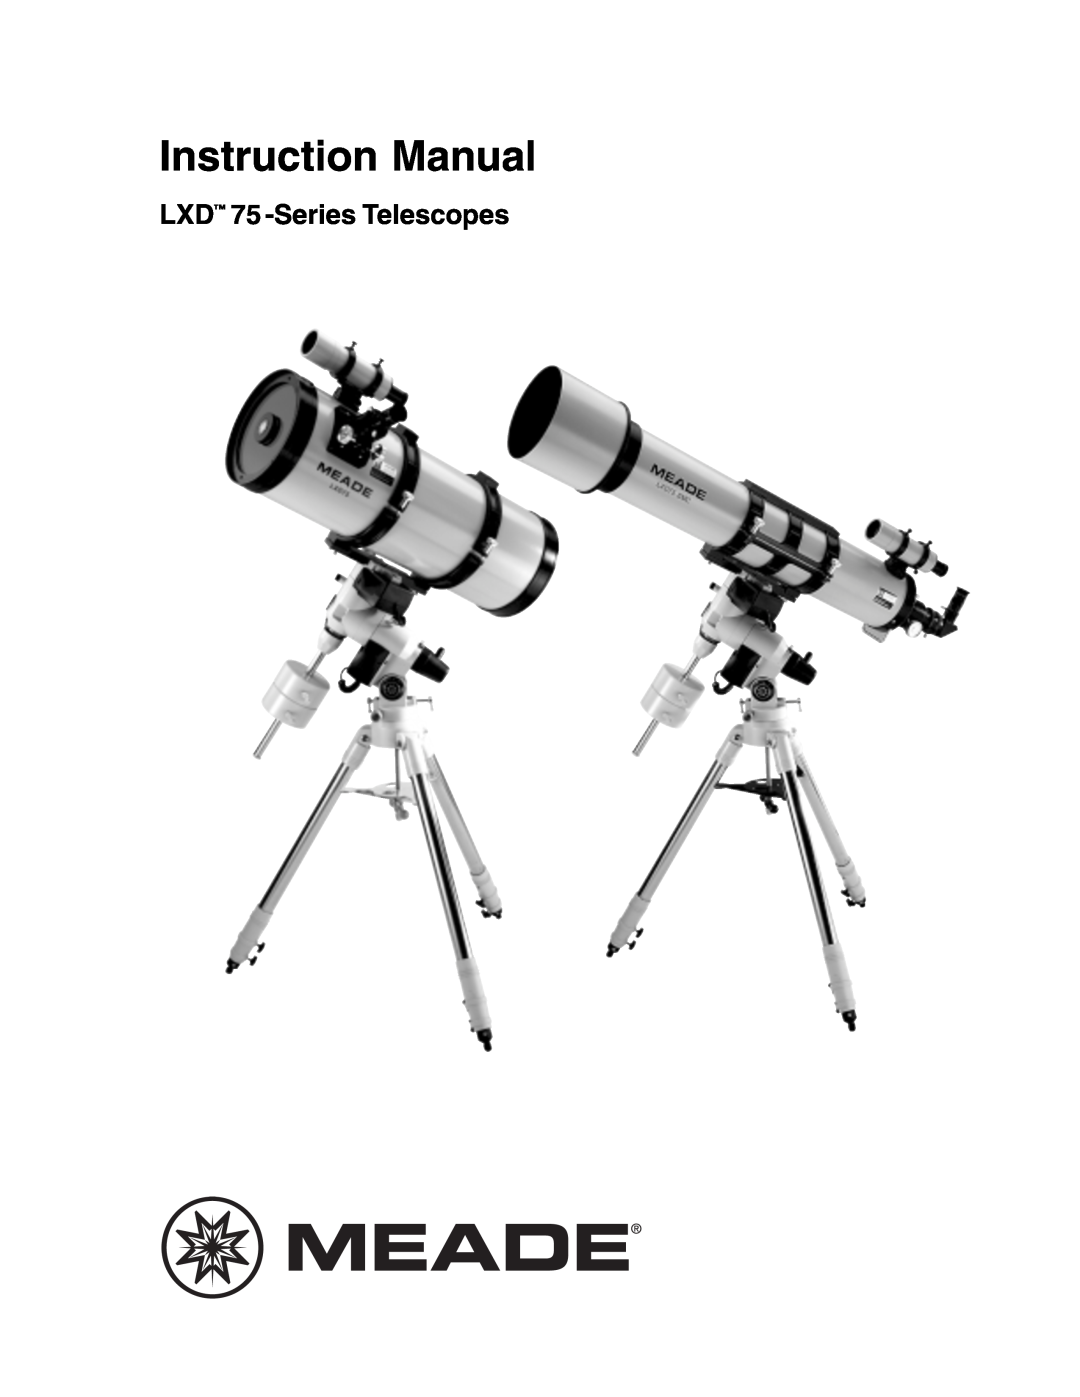 Meade LXD 75-Series instruction manual Instruction Manual, LXD 75 -SeriesTelescopes 